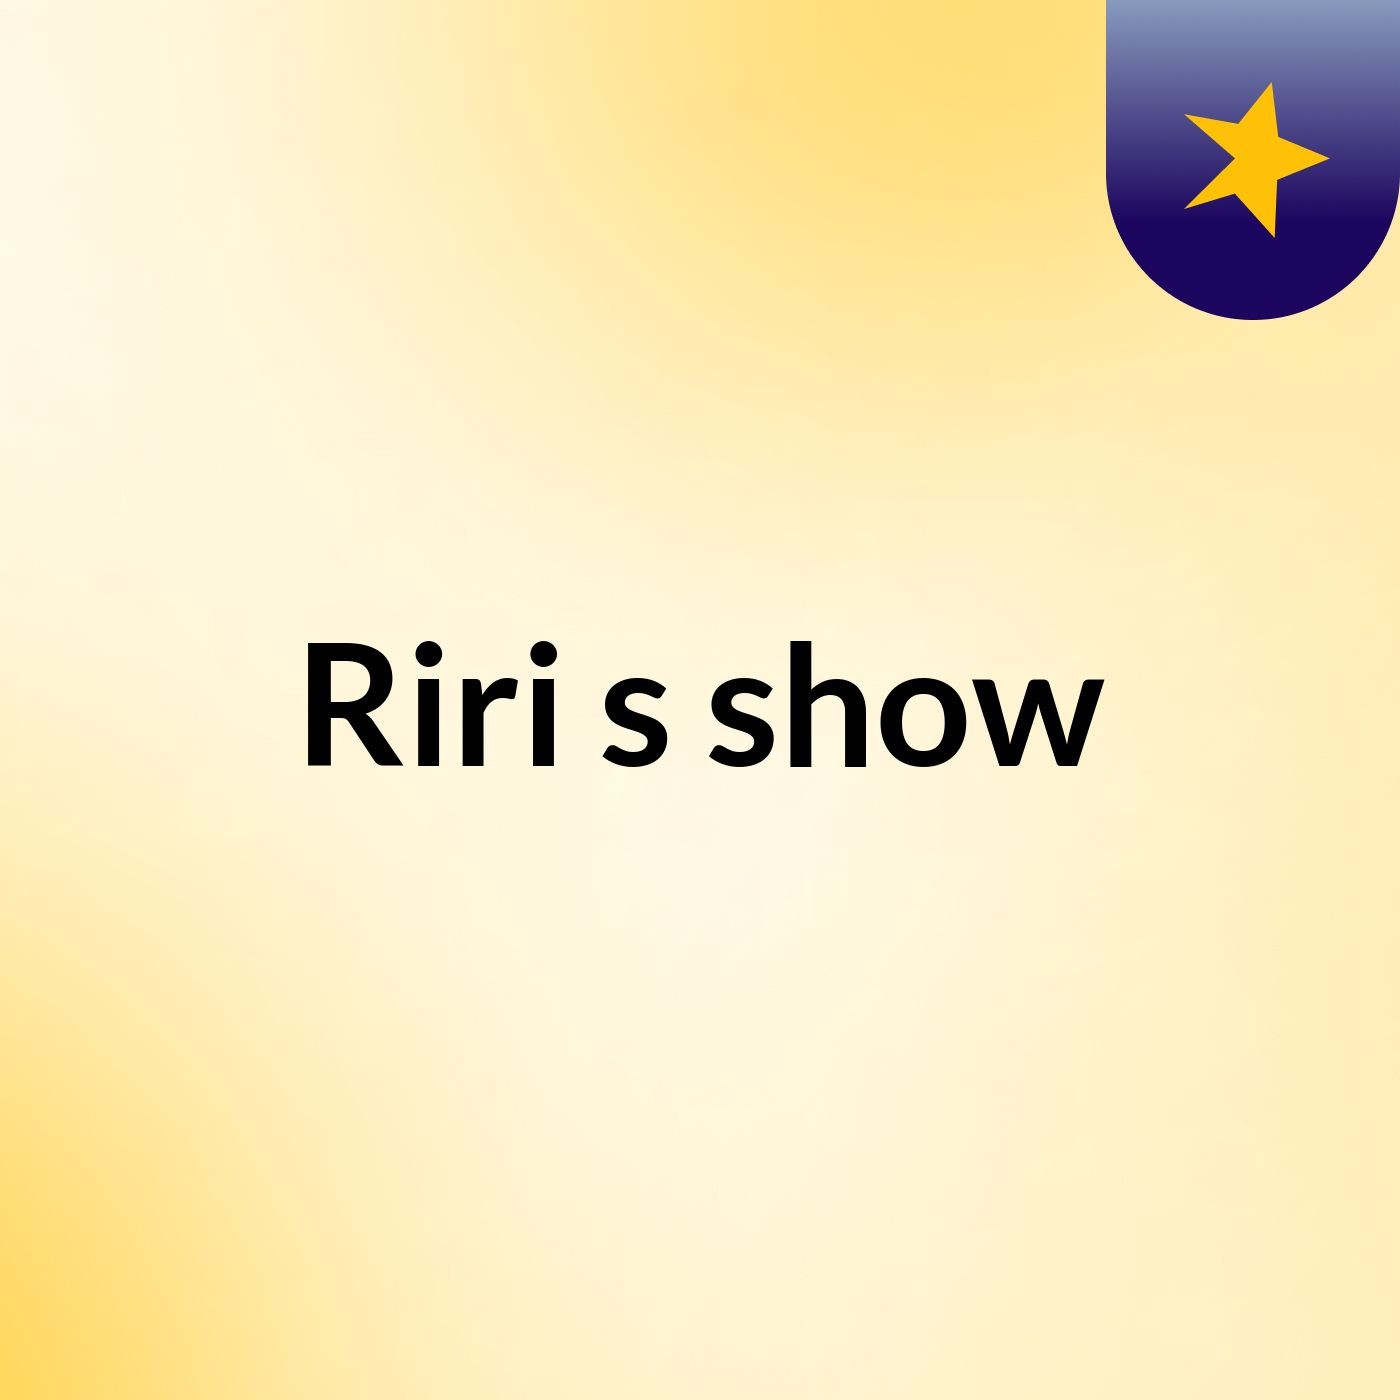 Riri's show